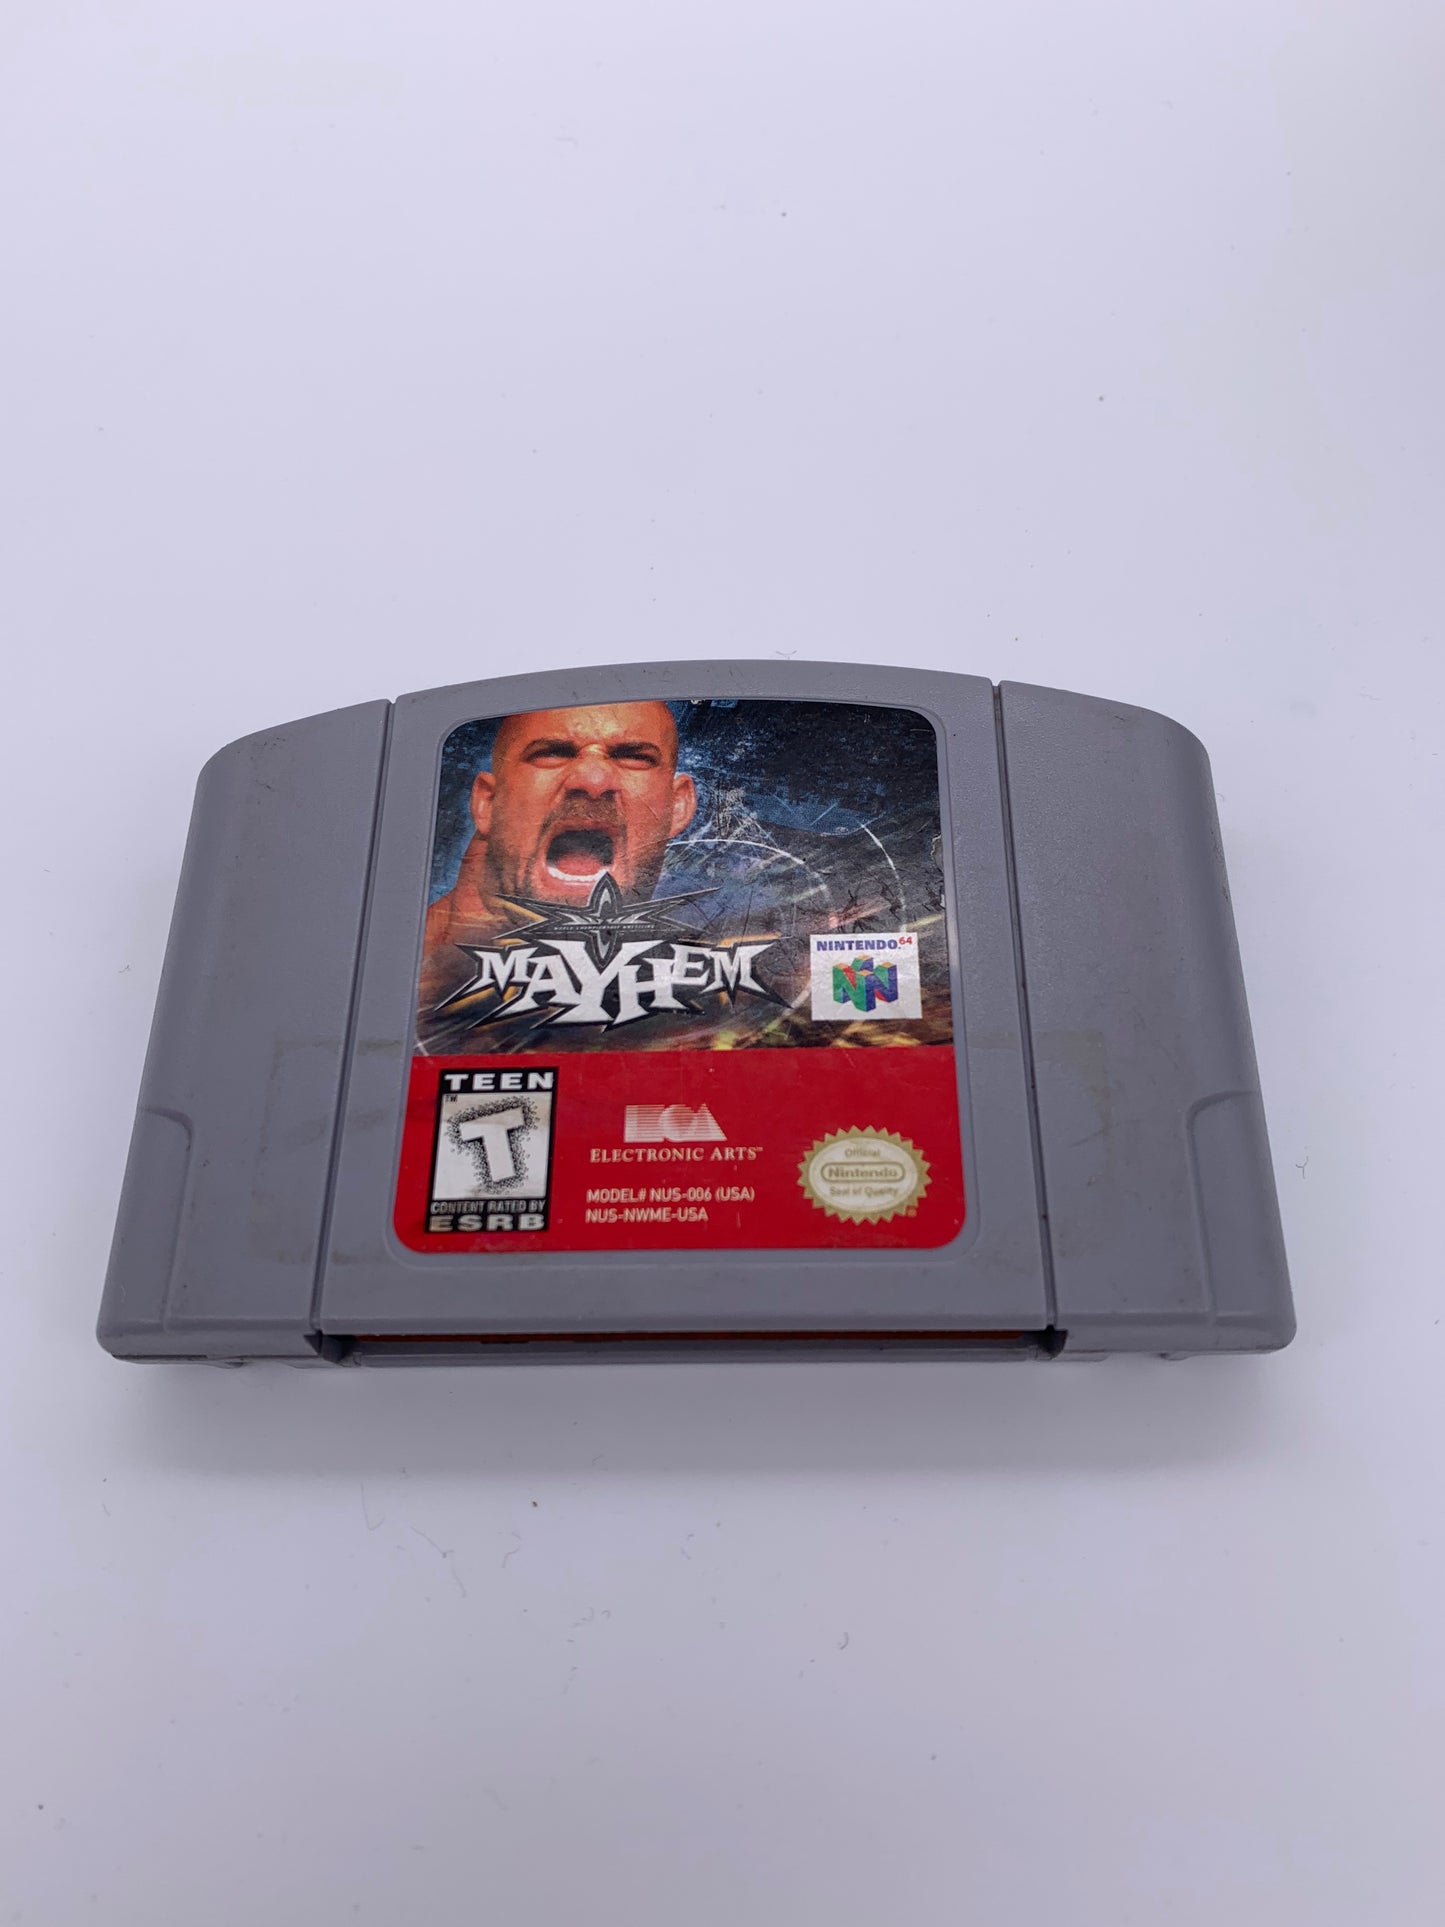 PiXEL-RETRO.COM : NINTENDO 64 (N64) GAME NTSC WCW MAYHEM